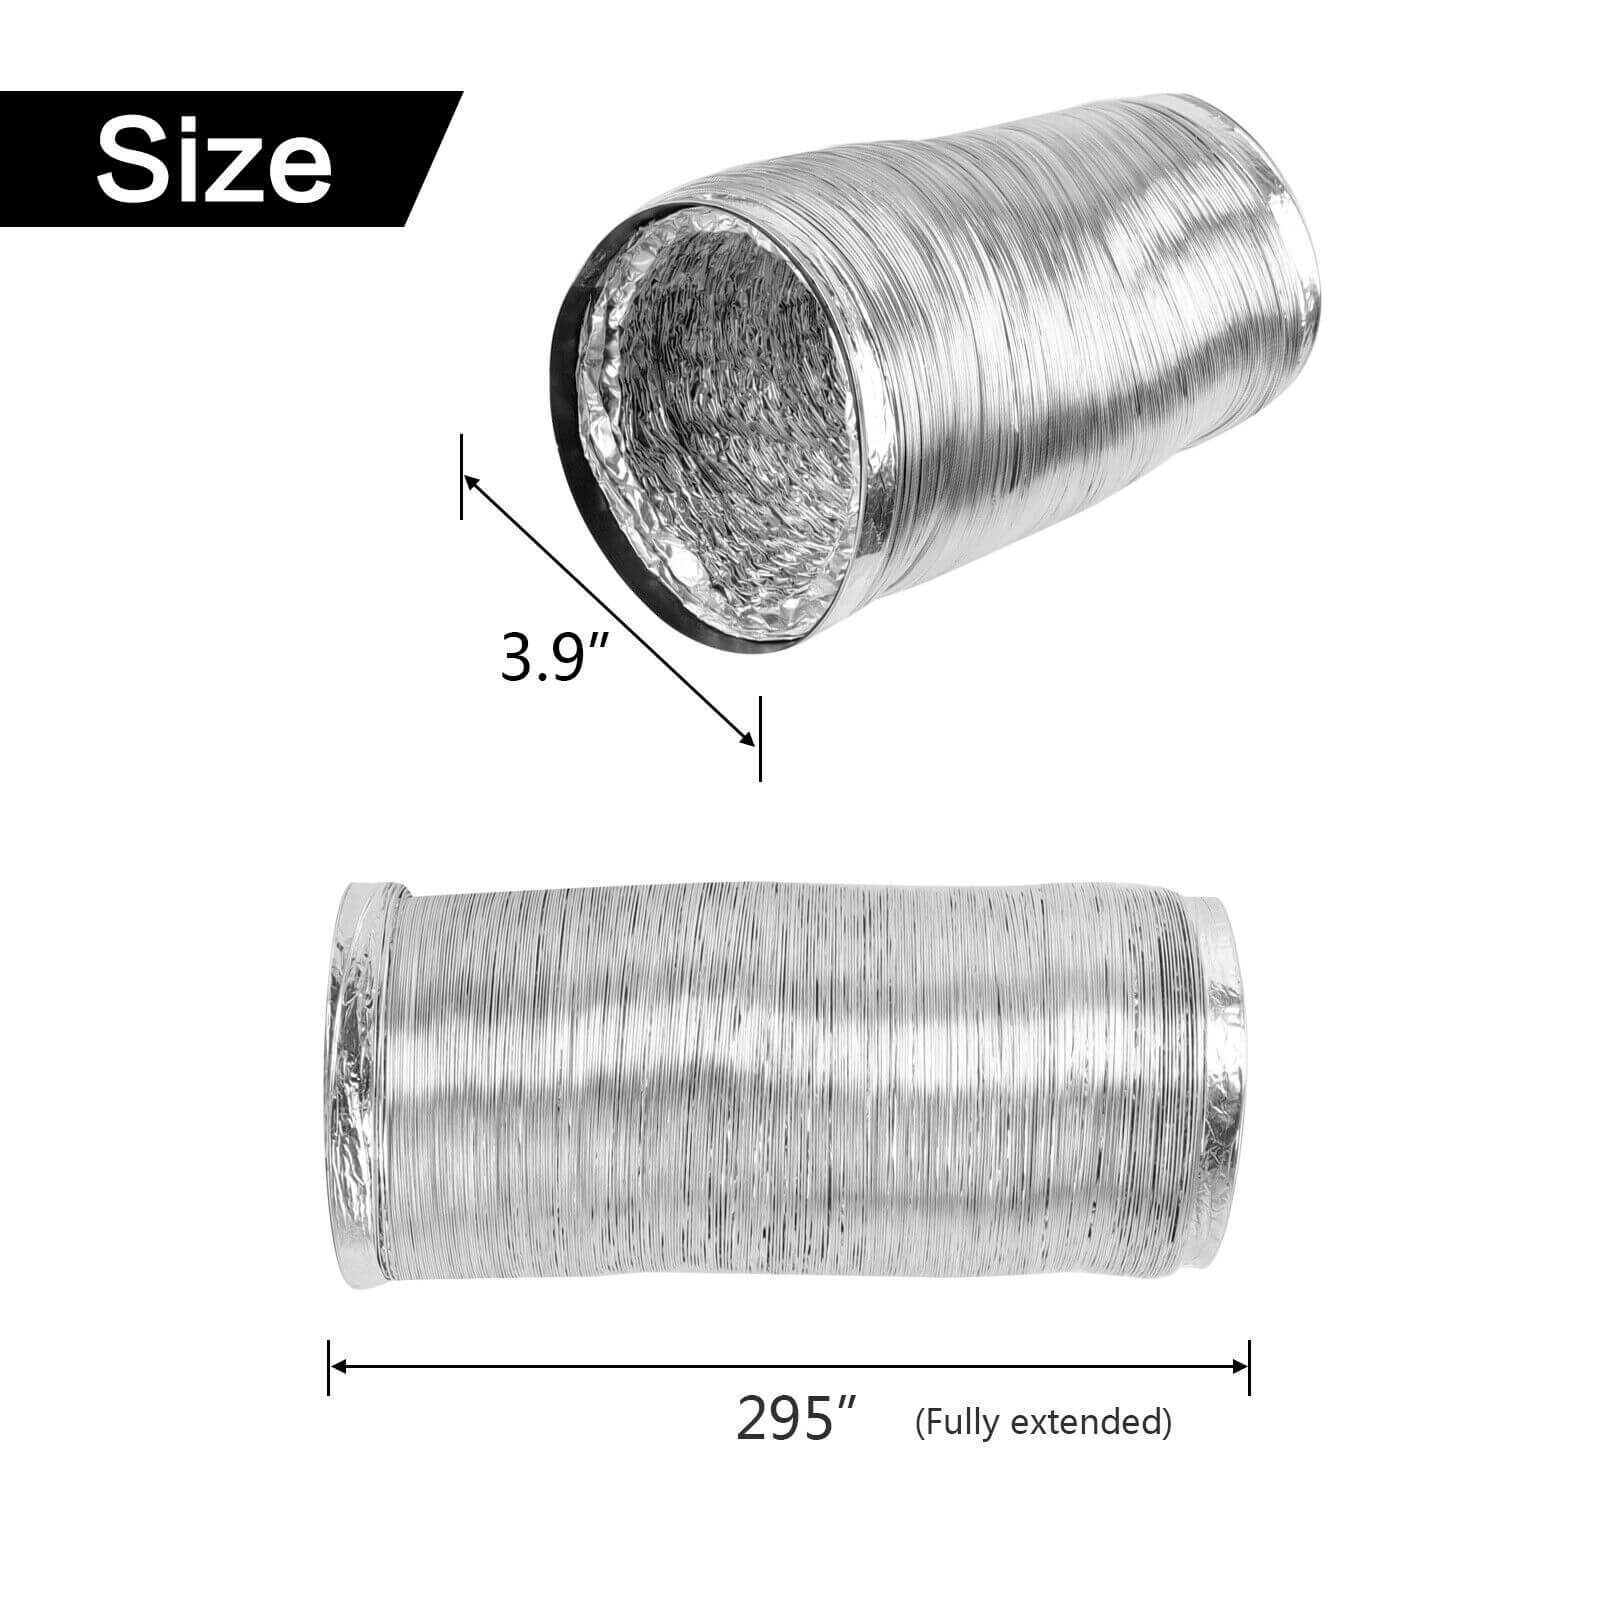 Size of 4/6/8"Non-Insulated Aluminum Air Ventilation Ducting Vent Hose